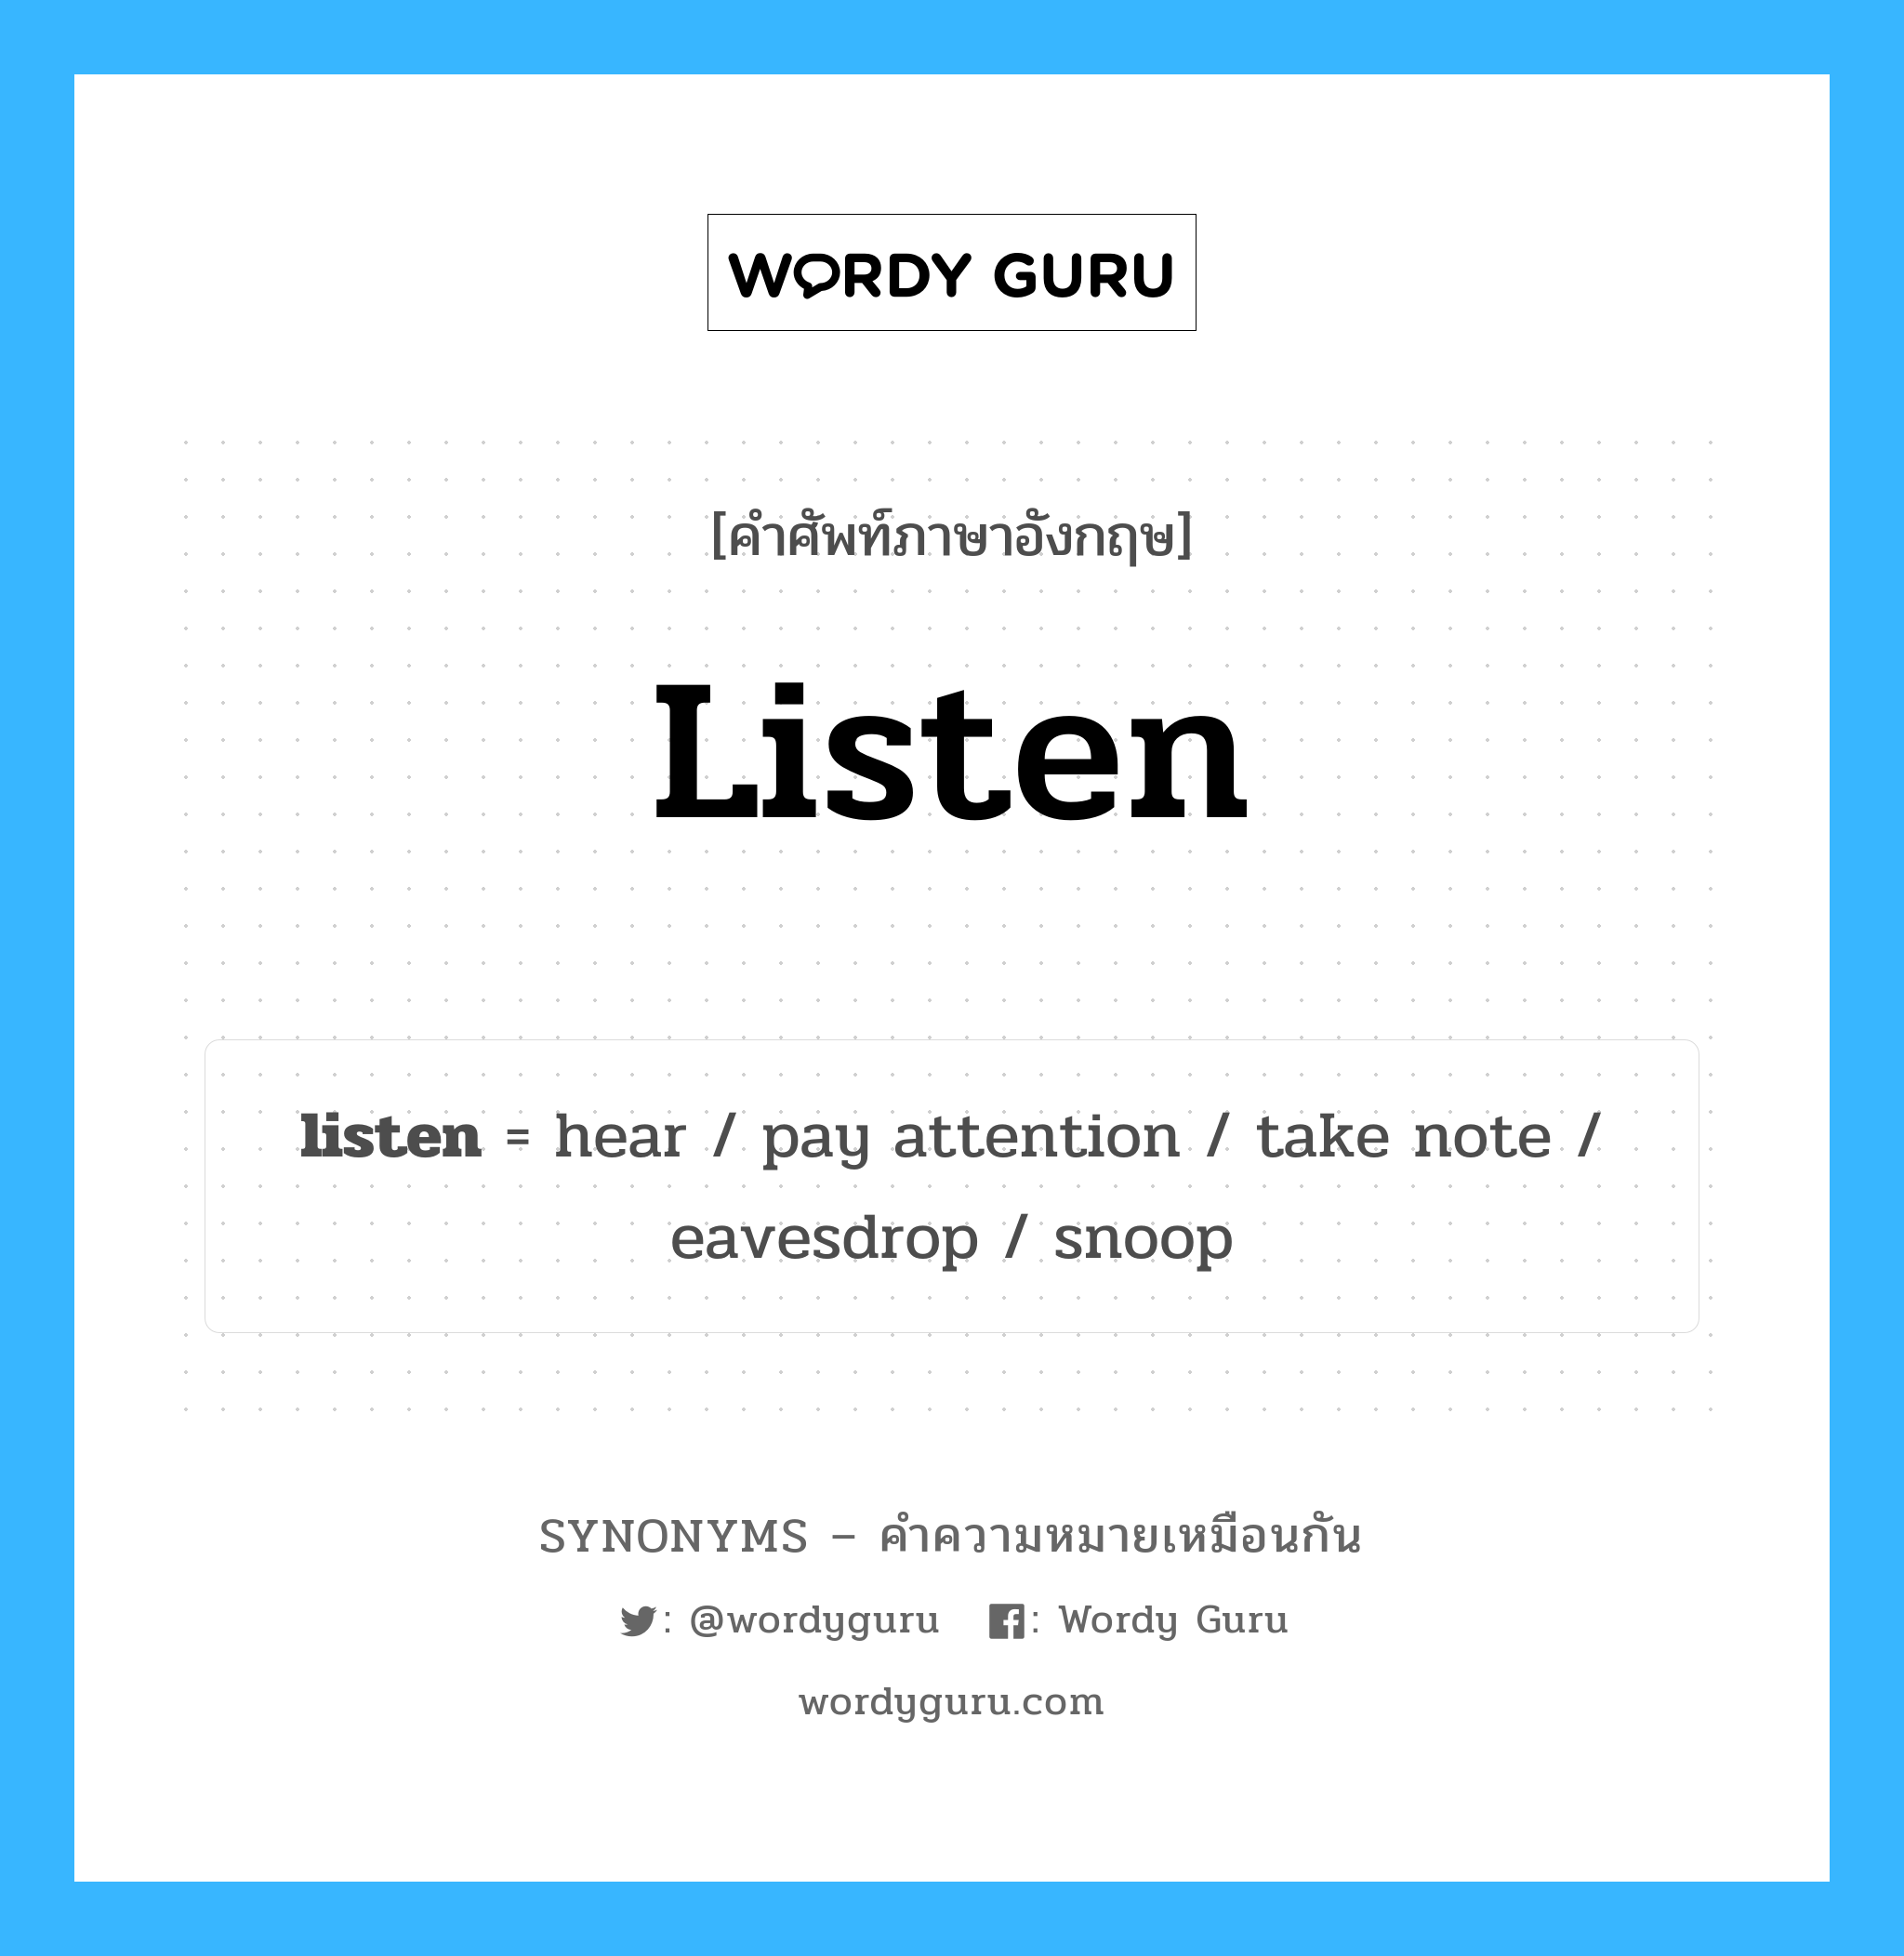 take note เป็นหนึ่งใน listen และมีคำอื่น ๆ อีกดังนี้, คำศัพท์ภาษาอังกฤษ take note ความหมายคล้ายกันกับ listen แปลว่า จด หมวด listen